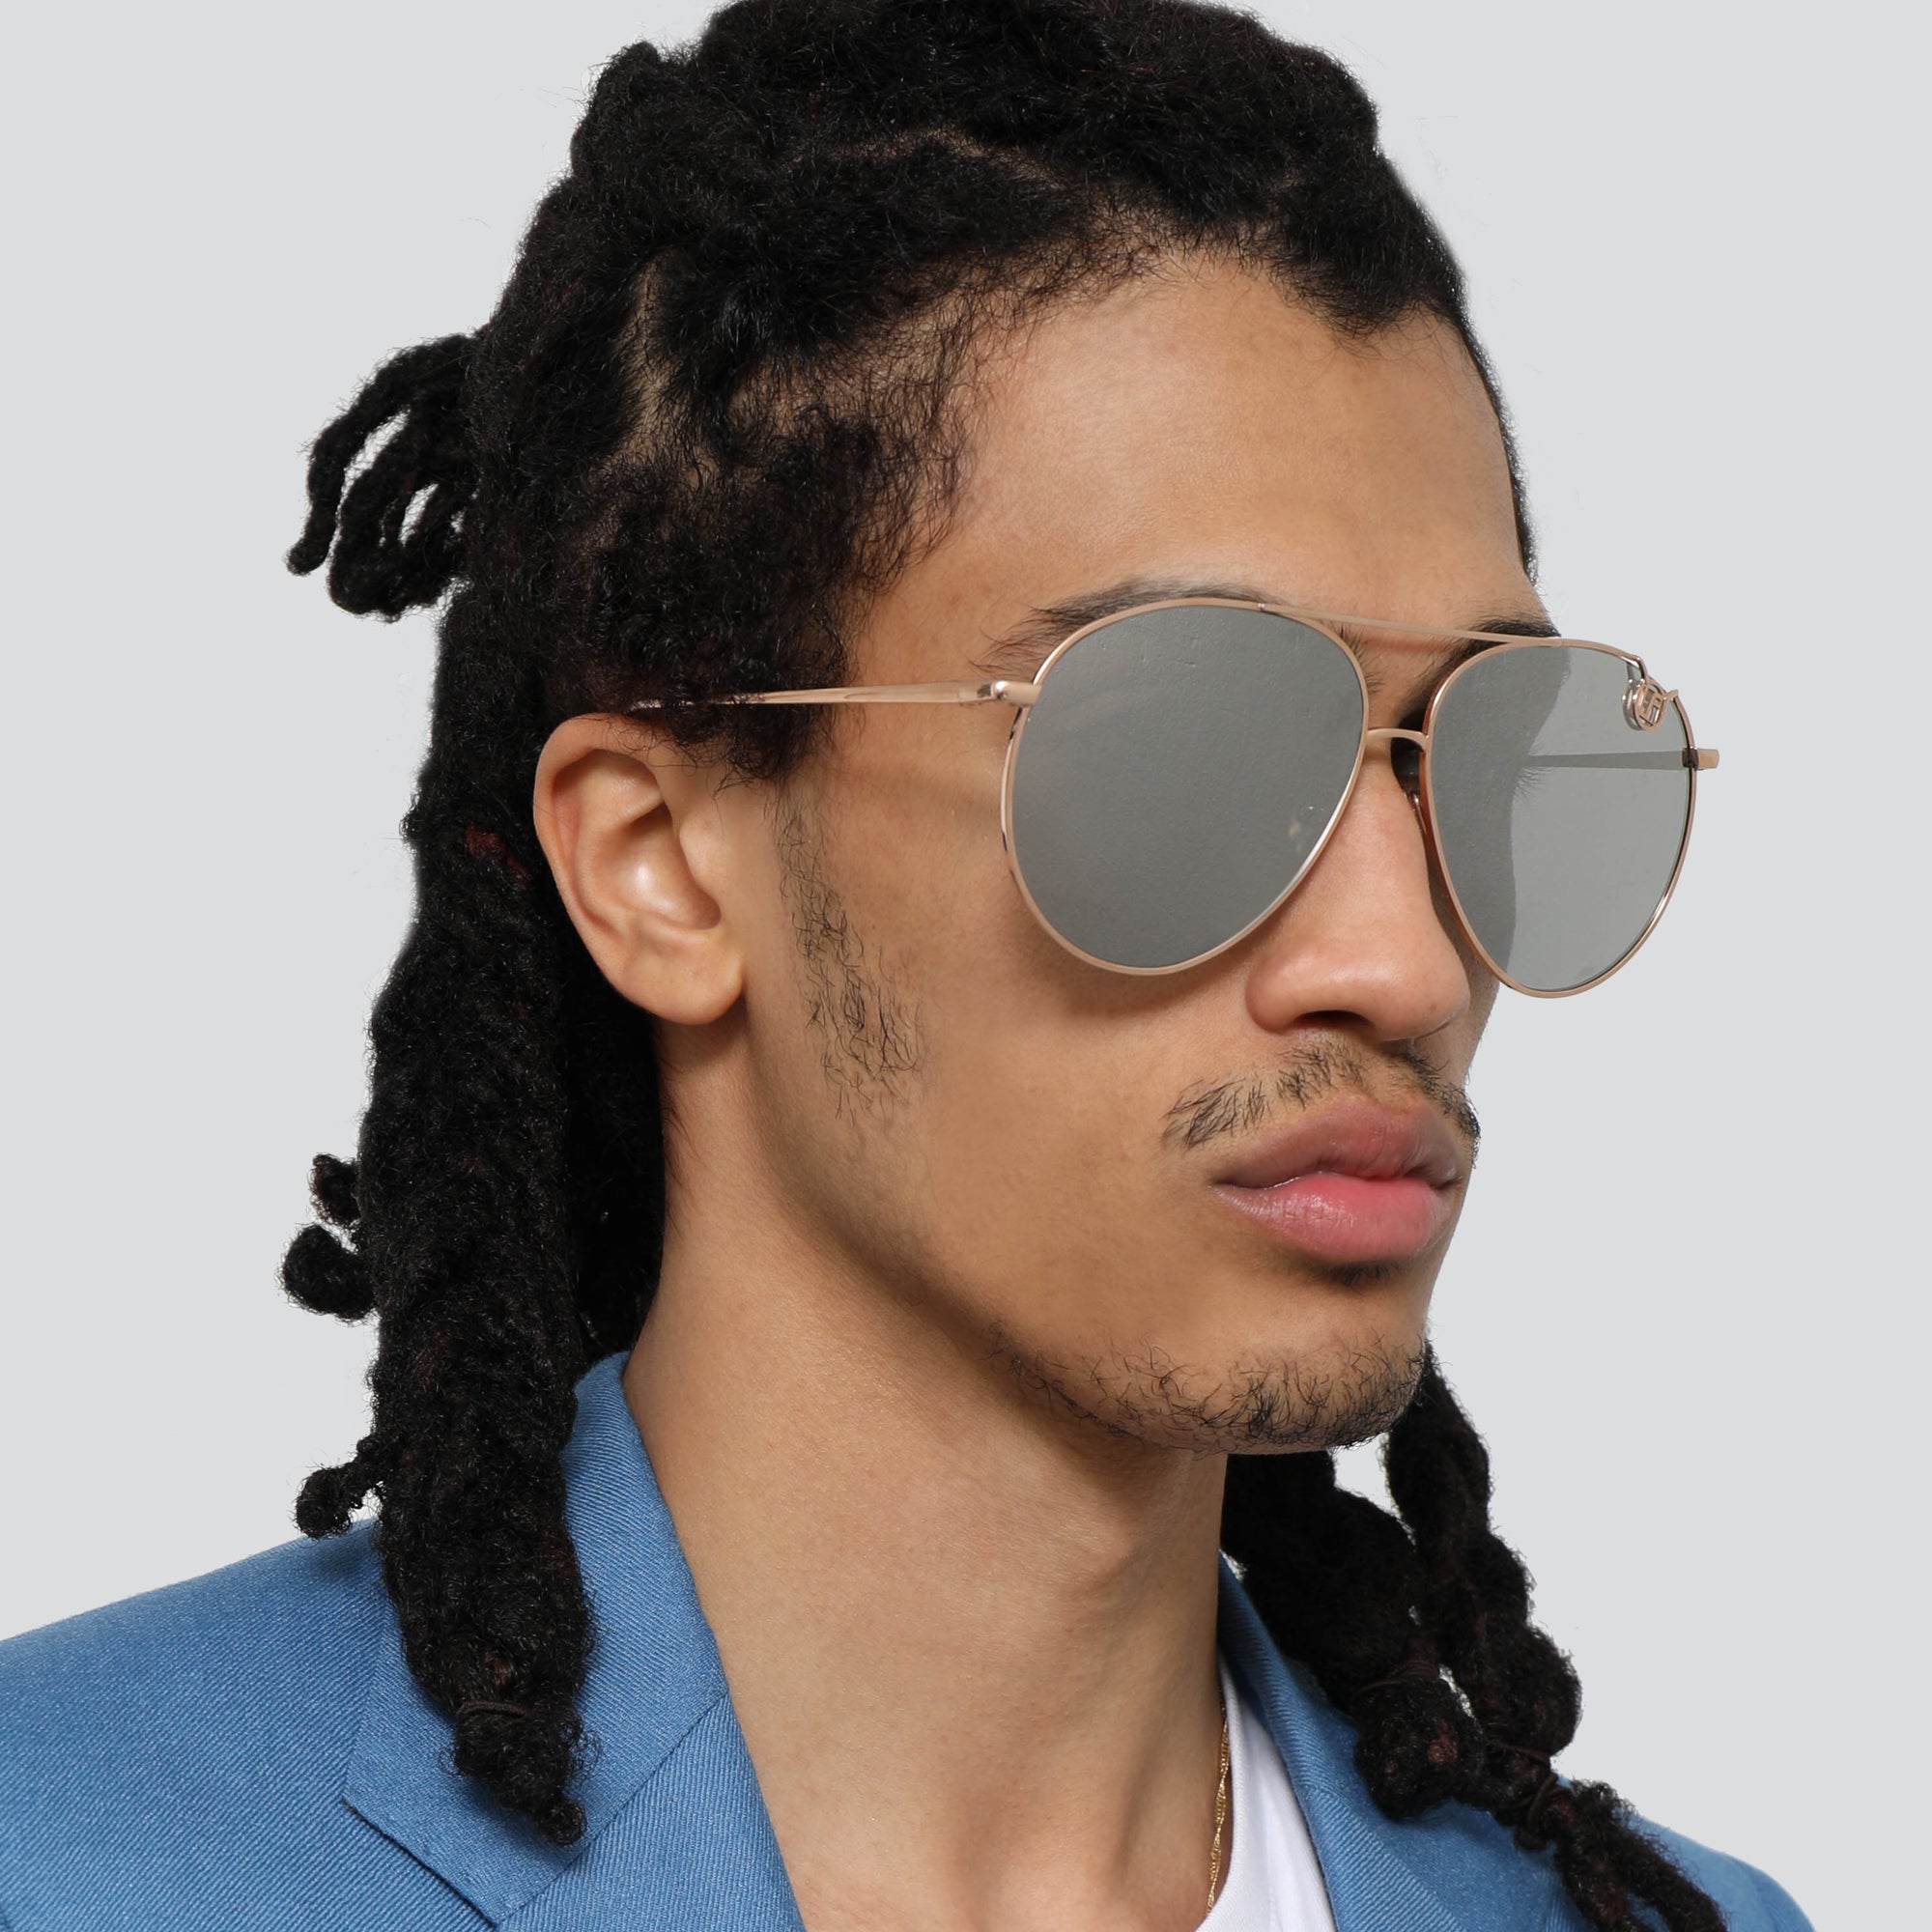 Joni Aviator Sunglasses in Rose Gold and Platinum Lenses (Men’s)